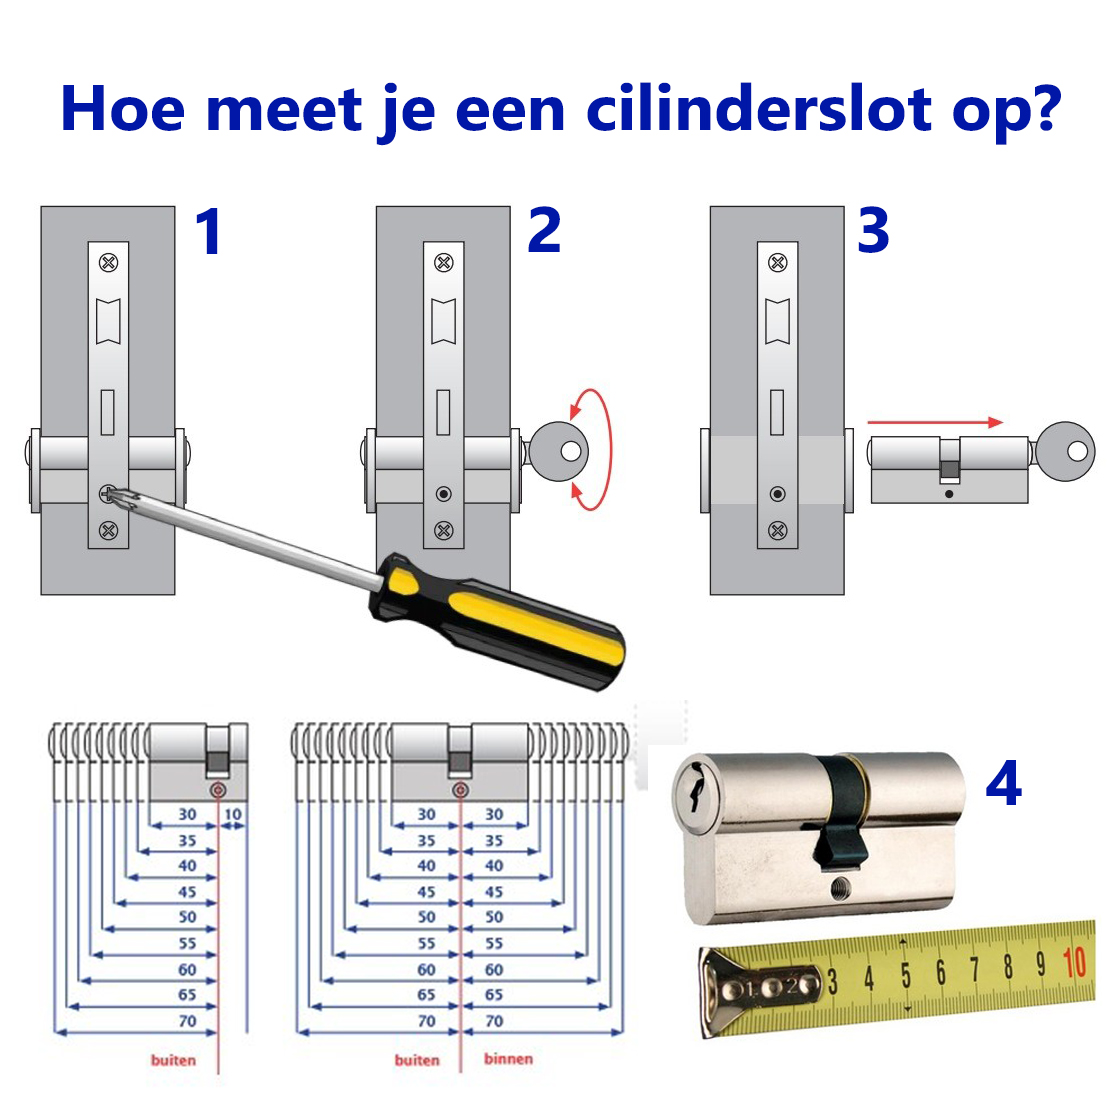 duif Verhogen Bliksem Cilinderslot vervangen - Haverkampshop.nl